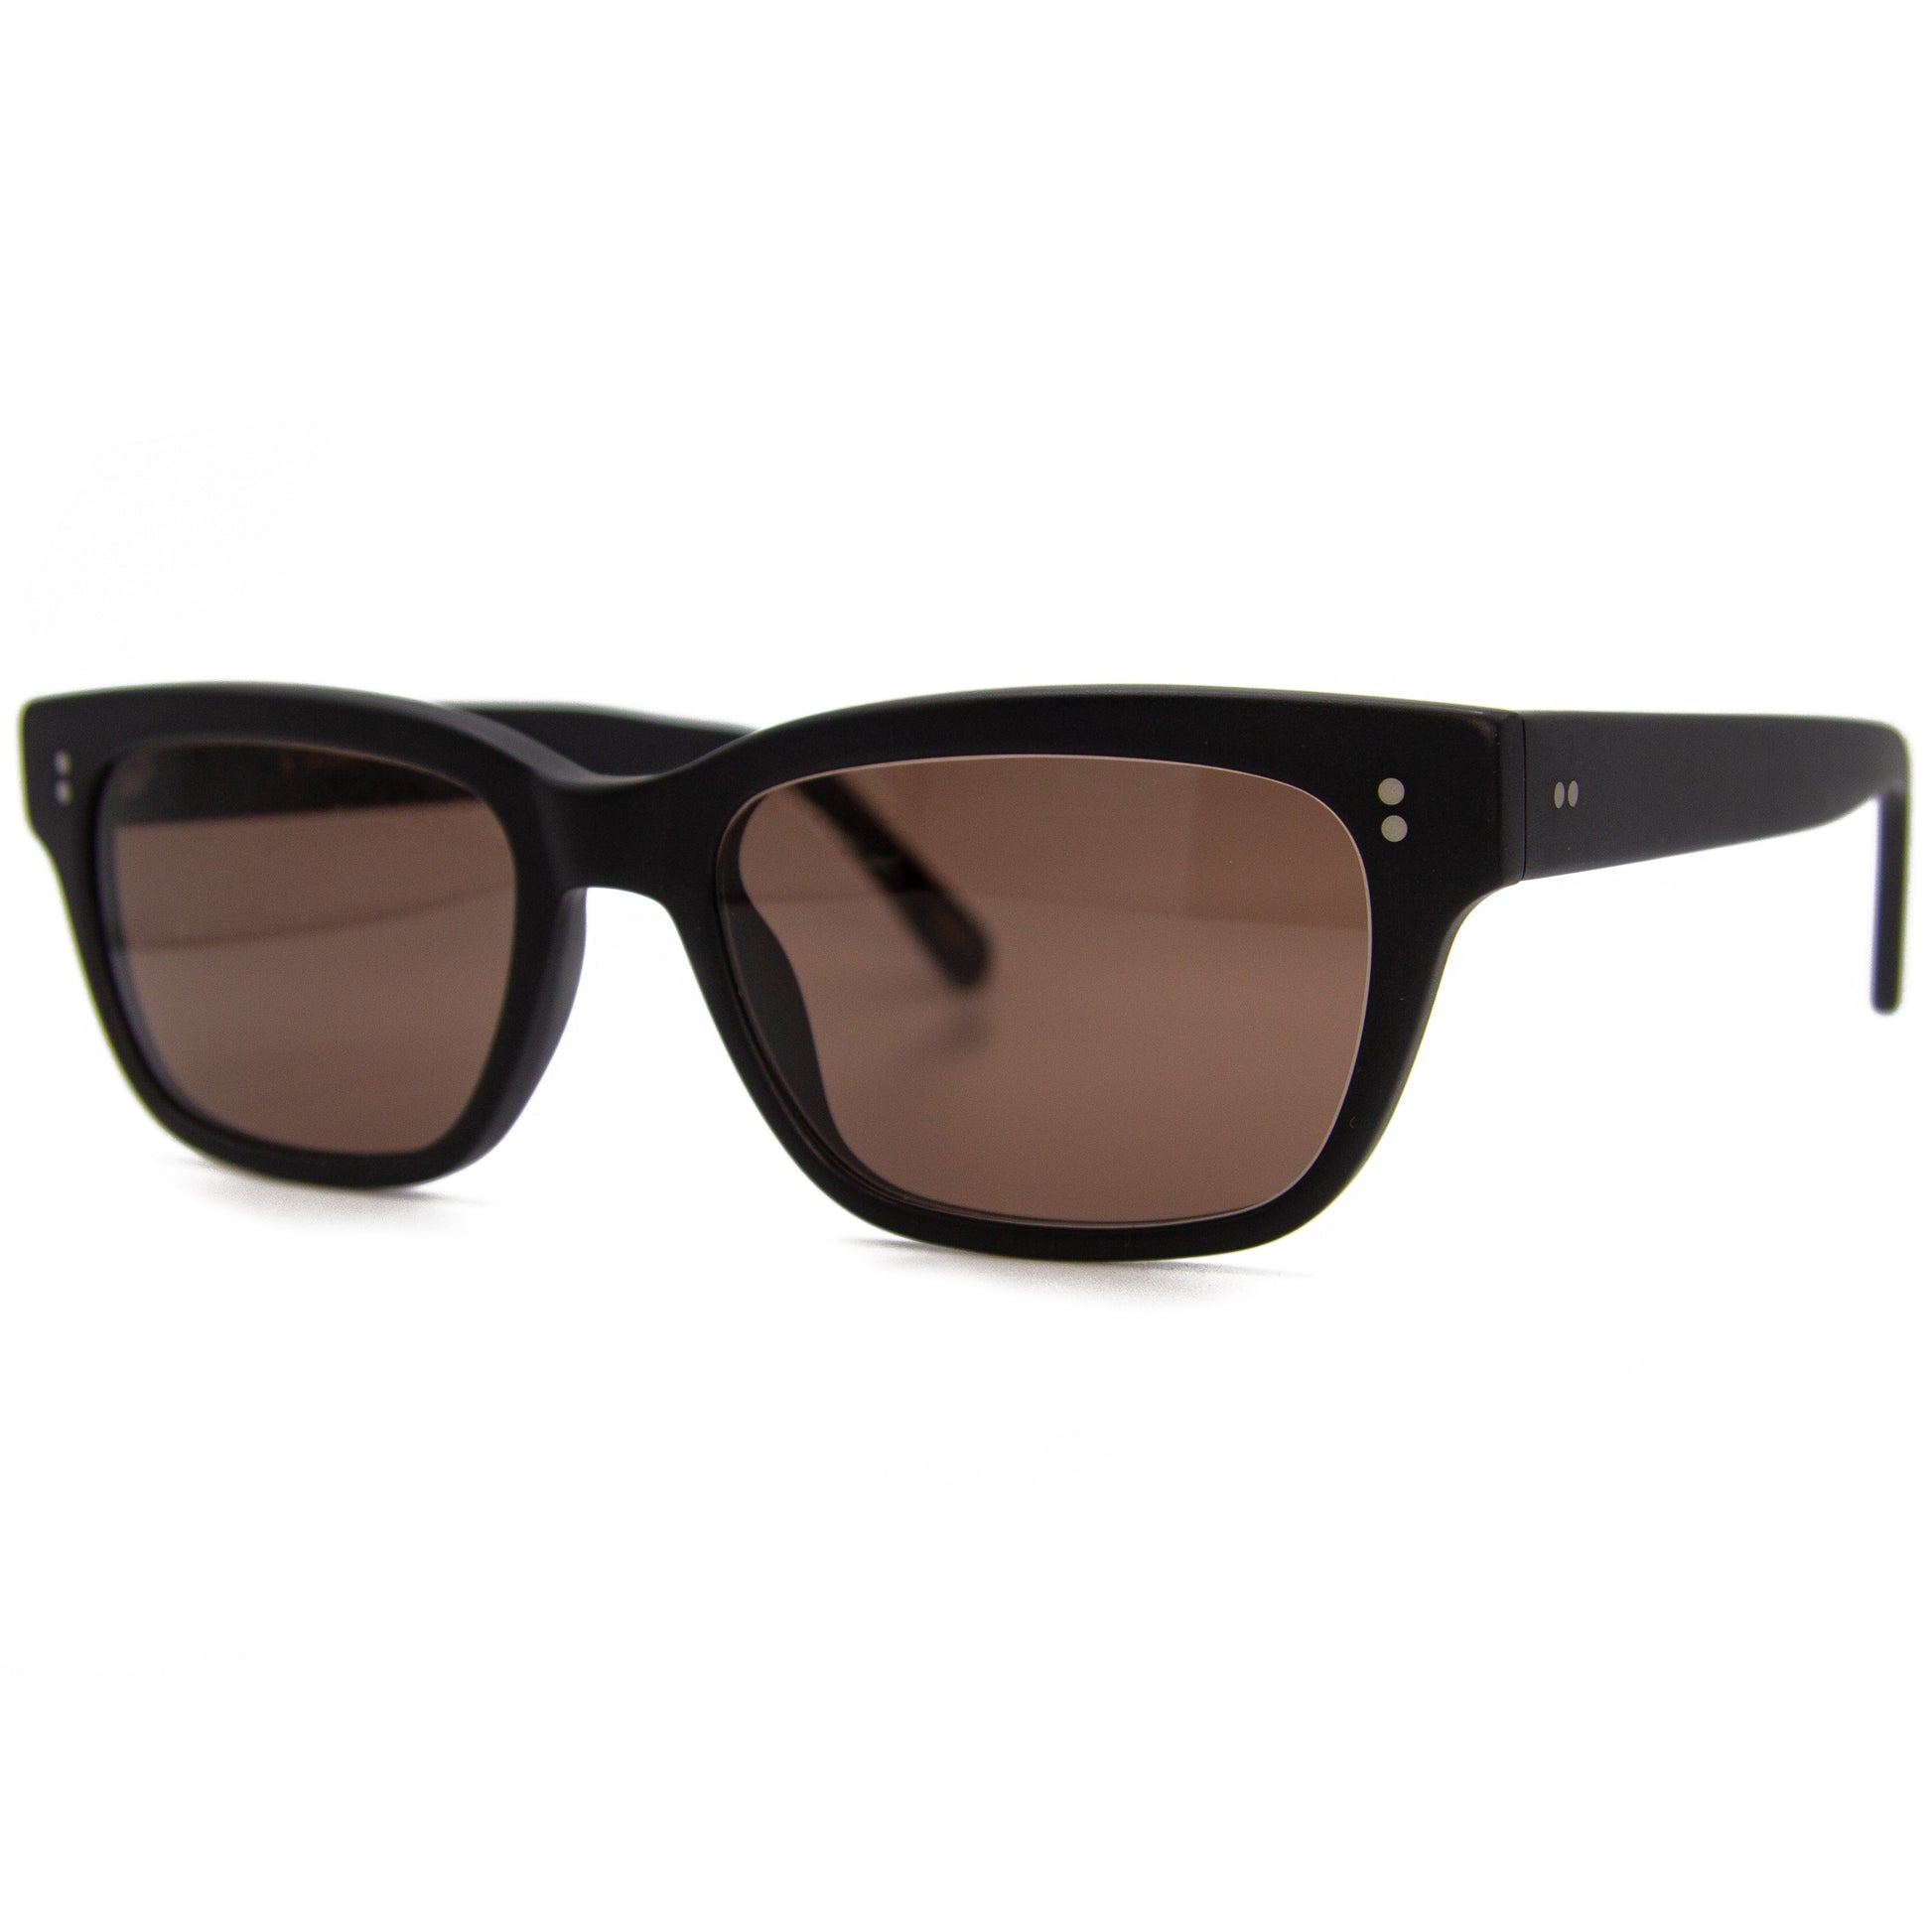 Chunky Rectangular Matte Black Sunglasses